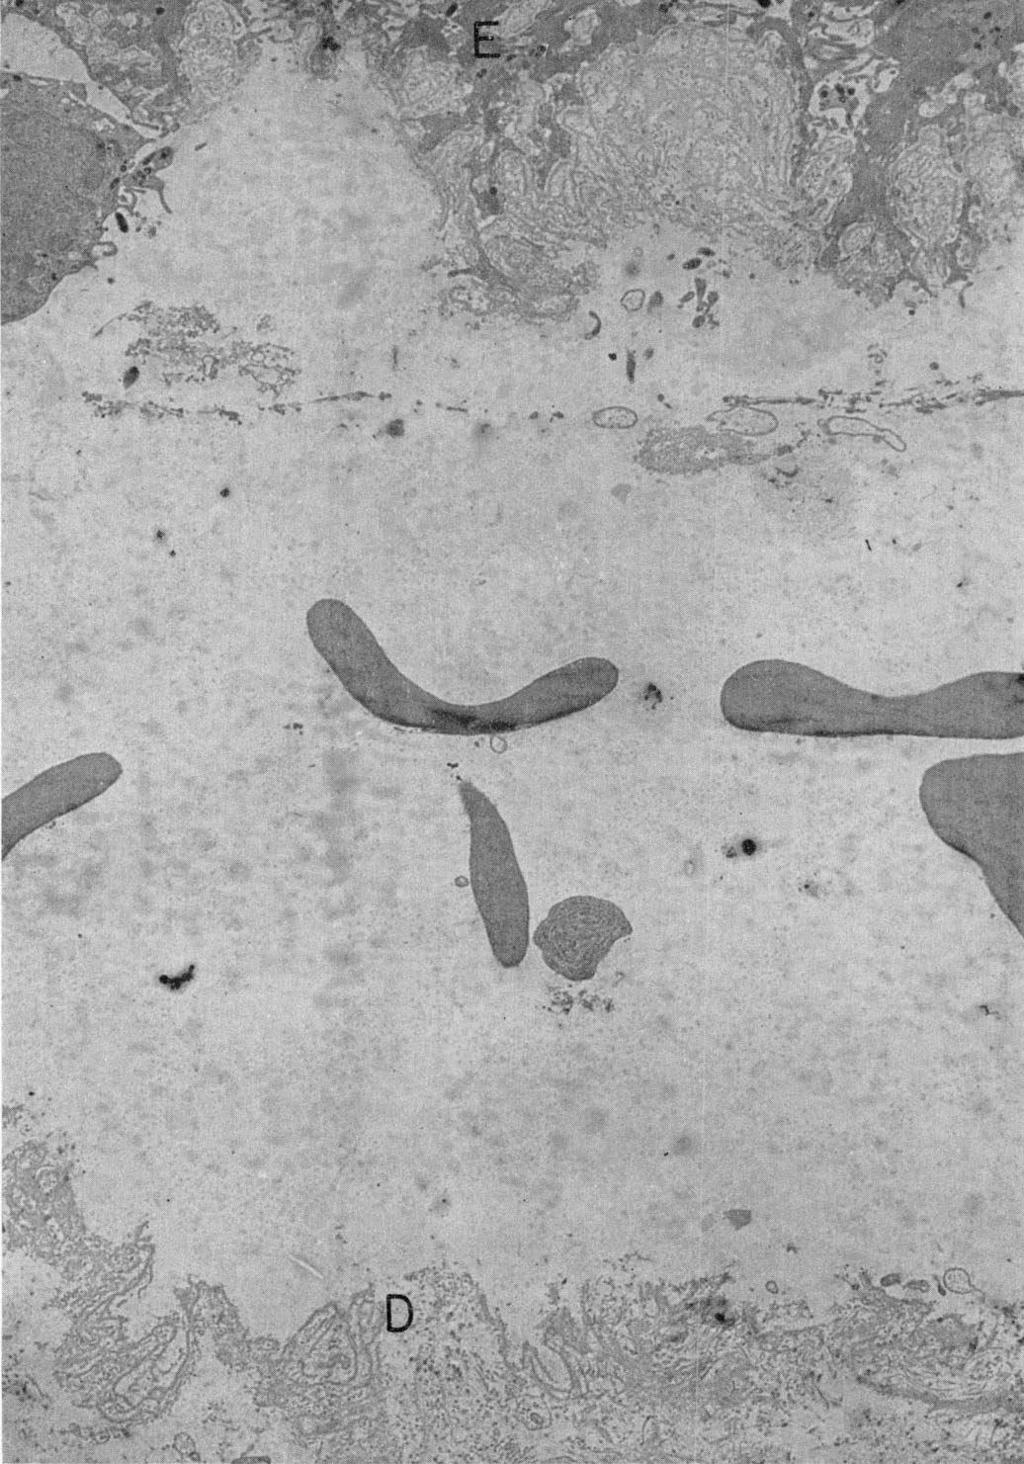 STUDIES ON THE PATHOGENESIS OF EPIDERMOLYSIS BULLOSA 571 ''s -- r.t:: r% -- t:-'- - - n 'S - - a r 4 A- we I 1: t.' S FIG. 22. Porphyria cutanea tarda. Low magnification electron micrograph.